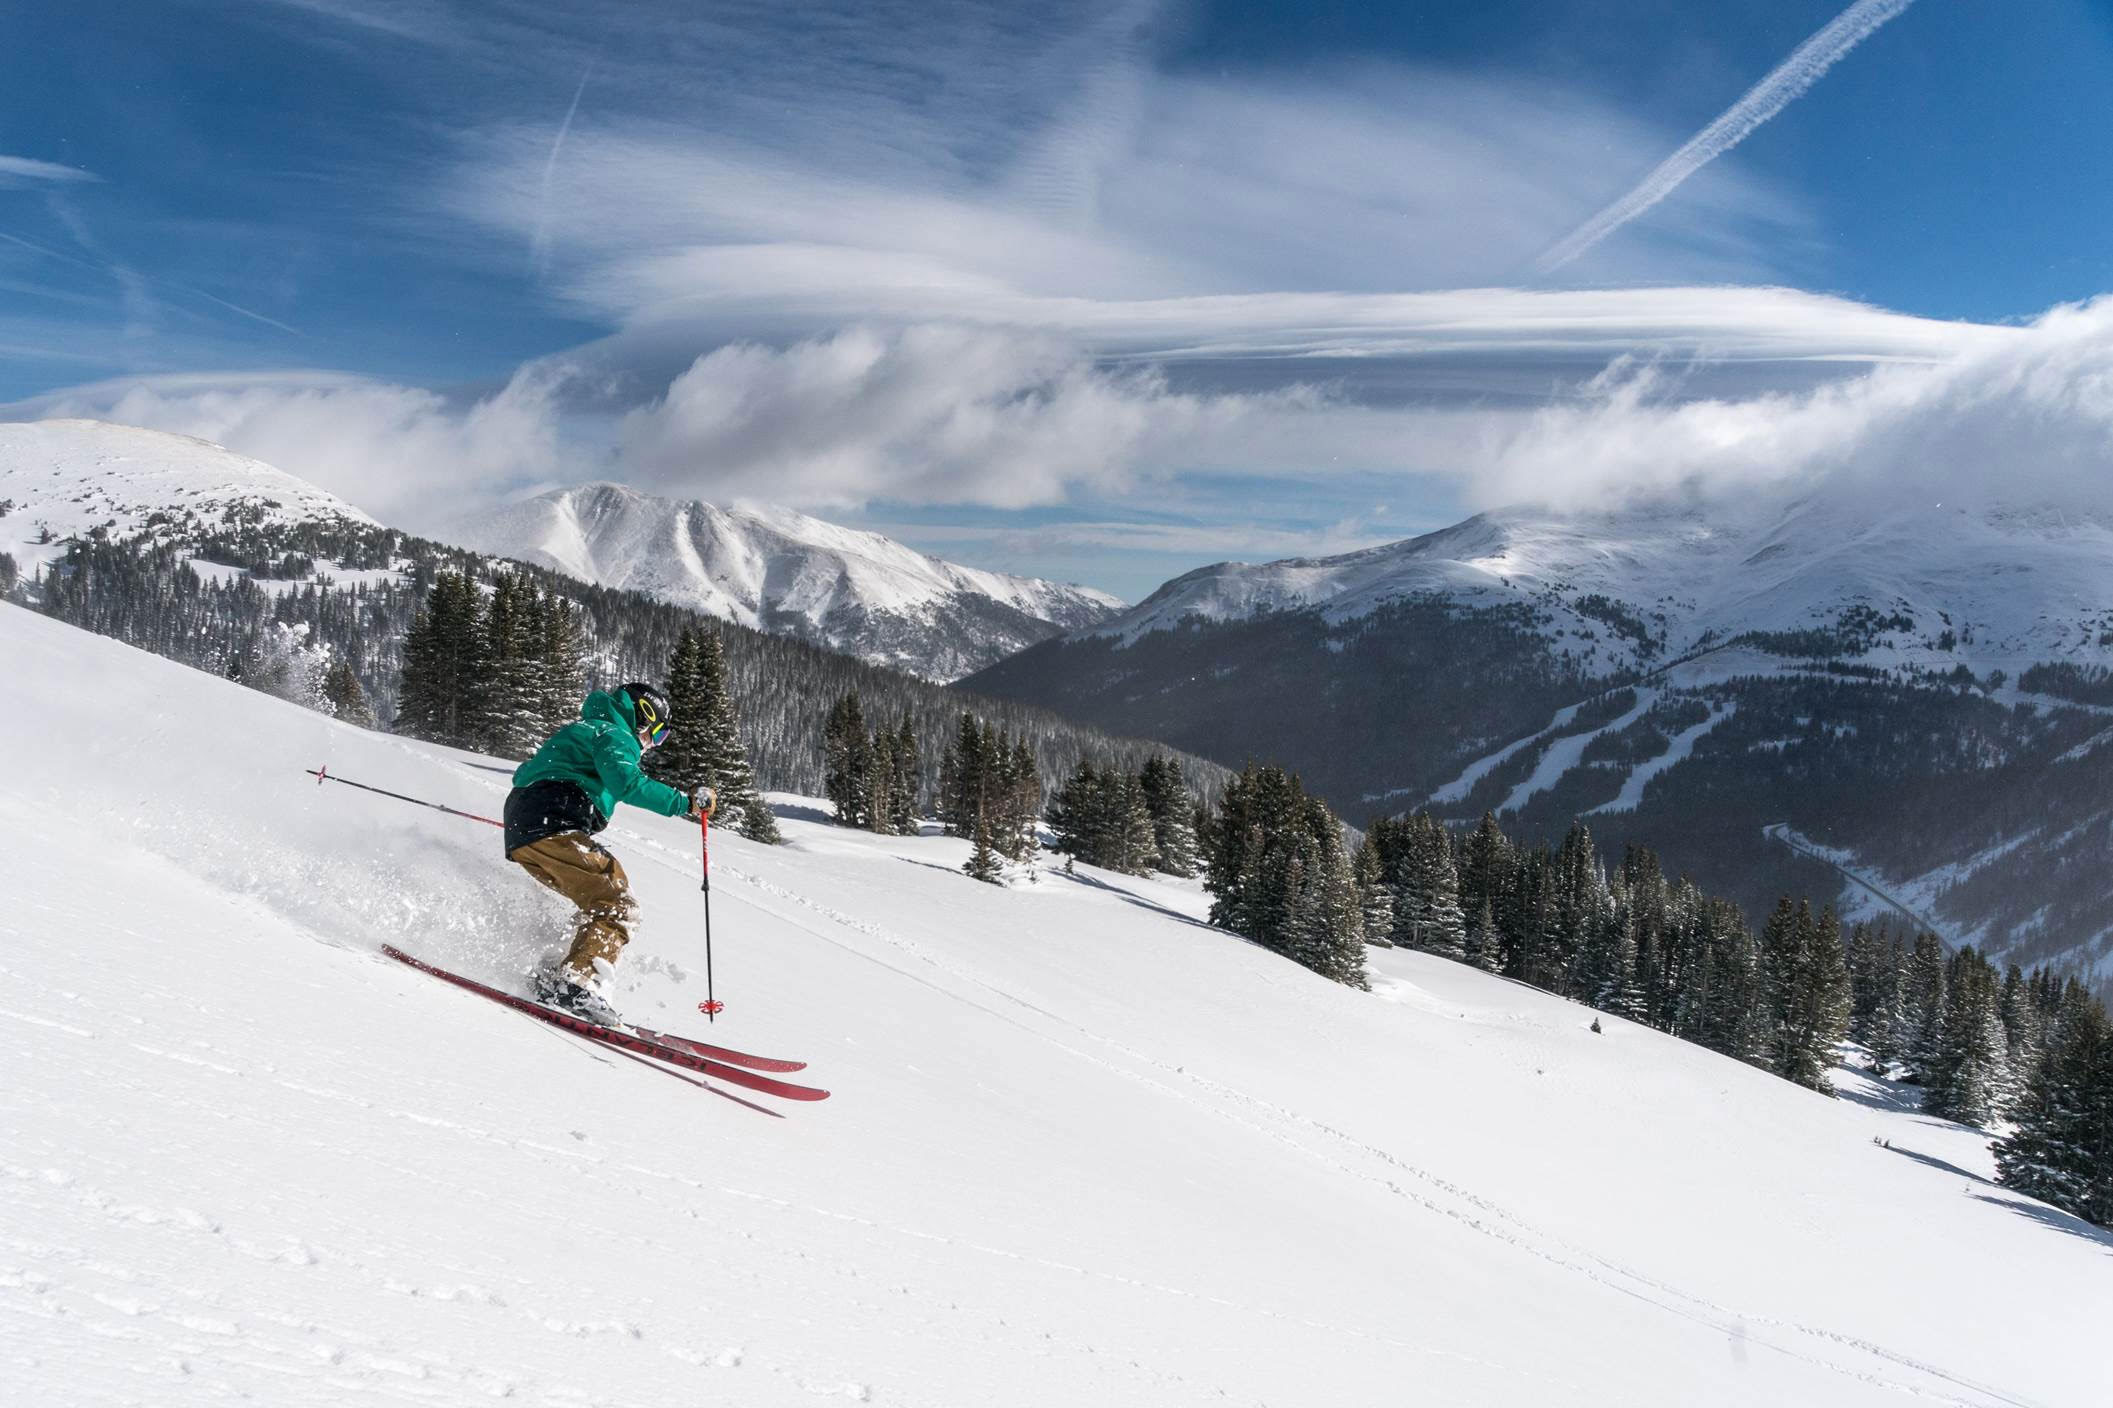 Skier dramatically sliding down the mountain at Loveland Ski Resort.